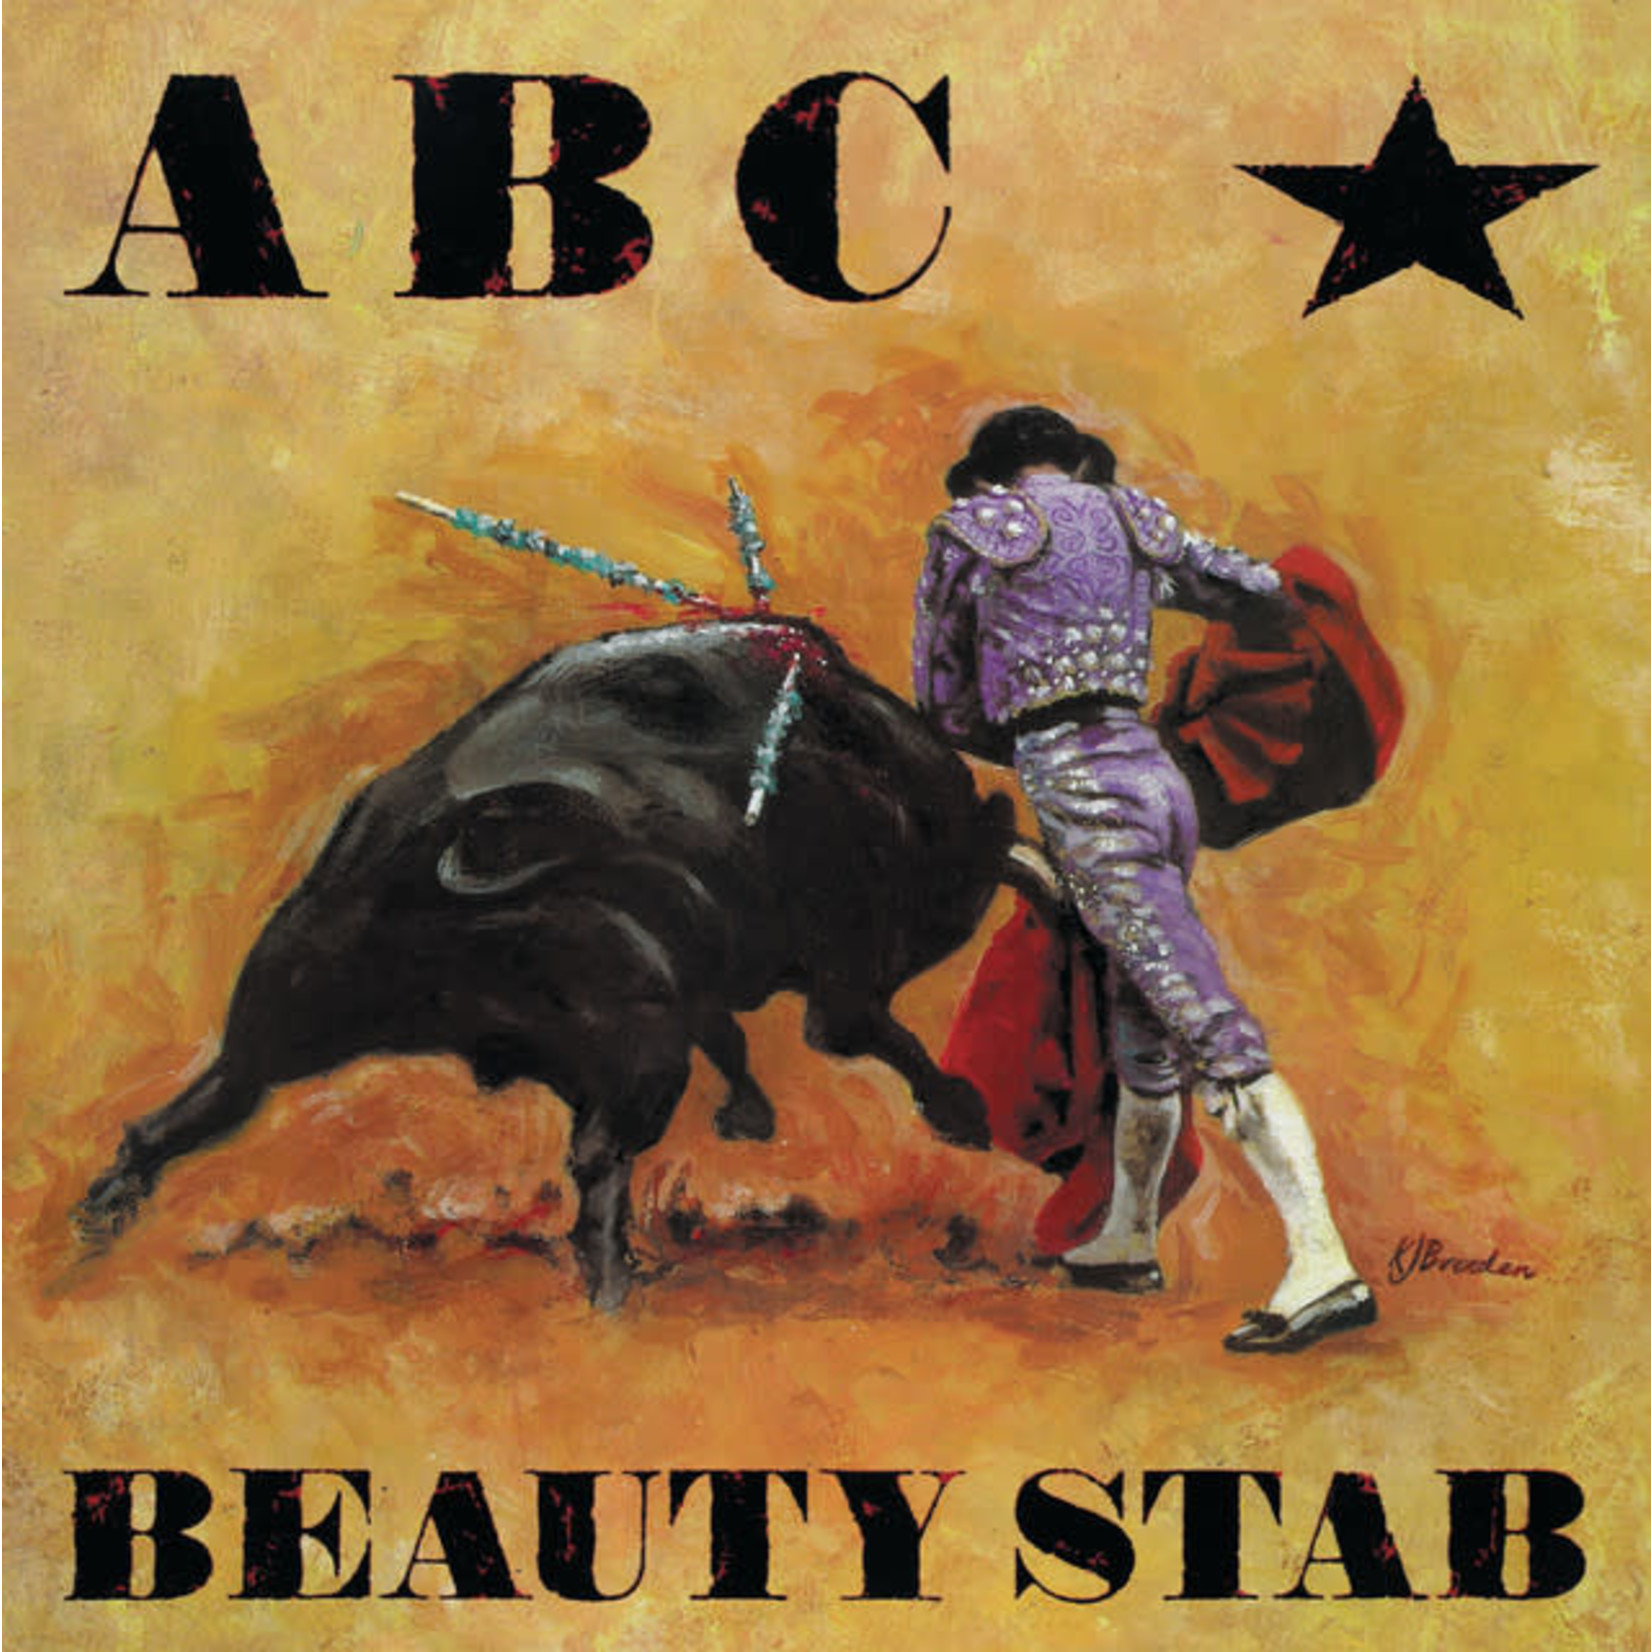 [Vintage] ABC - Beauty Stab